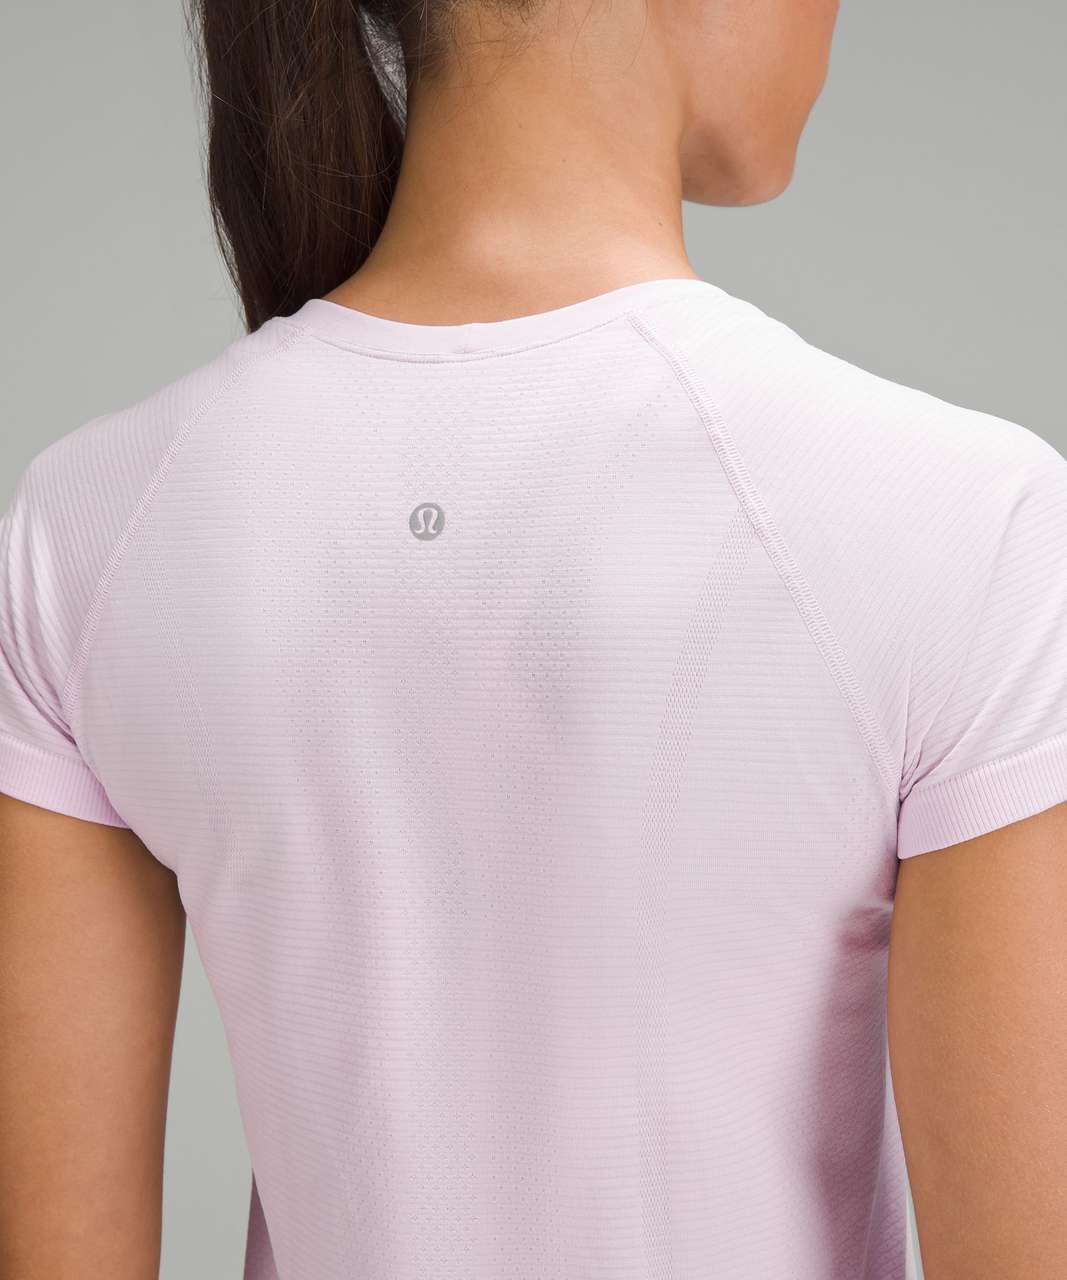 Lululemon Swiftly Tech Short-Sleeve Shirt 2.0 - Meadowsweet Pink / Meadowsweet Pink